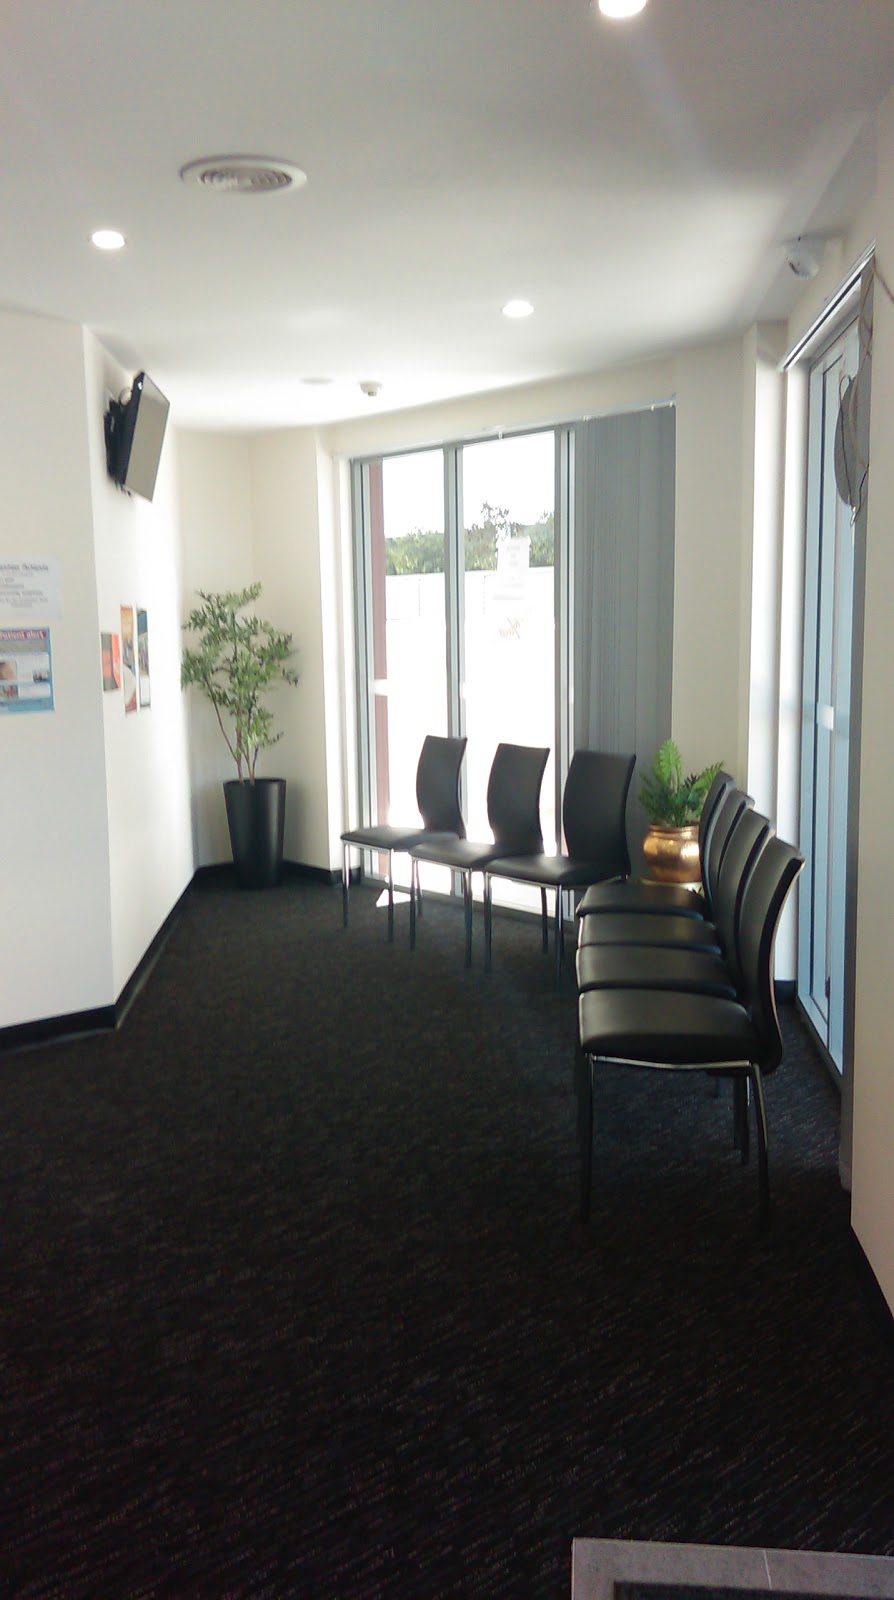 Best Care Medical Clinic | 50/12 Merriville Rd, Kellyville Ridge NSW 2155, Australia | Phone: (02) 8883 4502